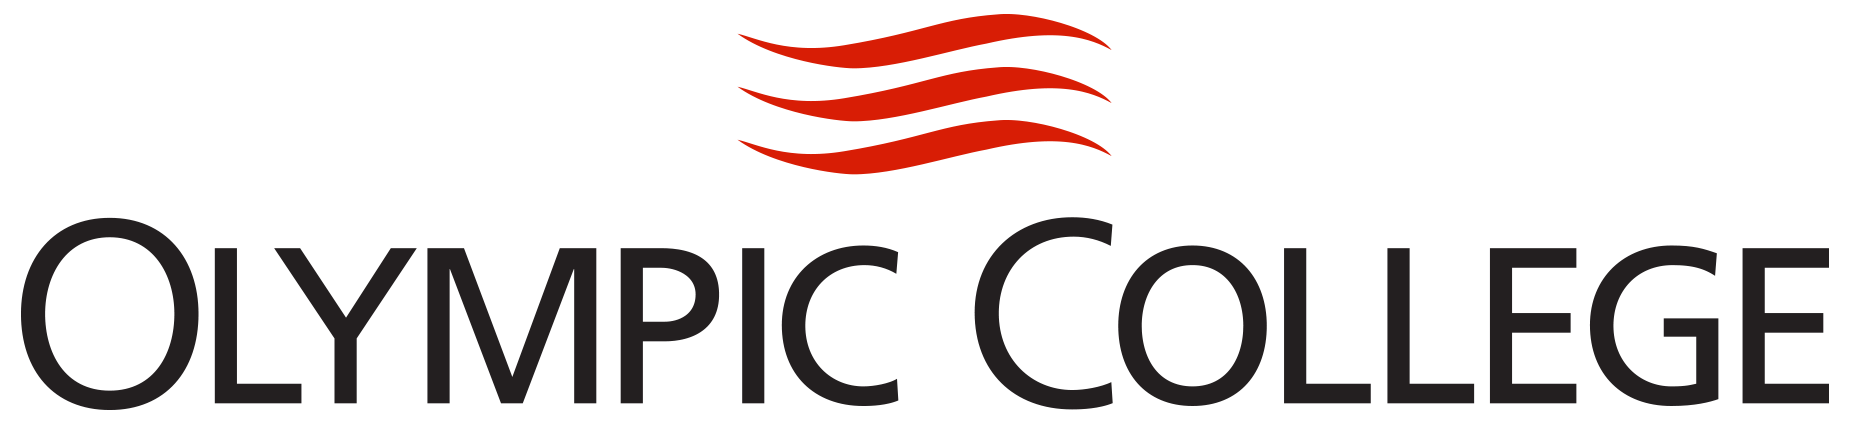 Olympic College logo.